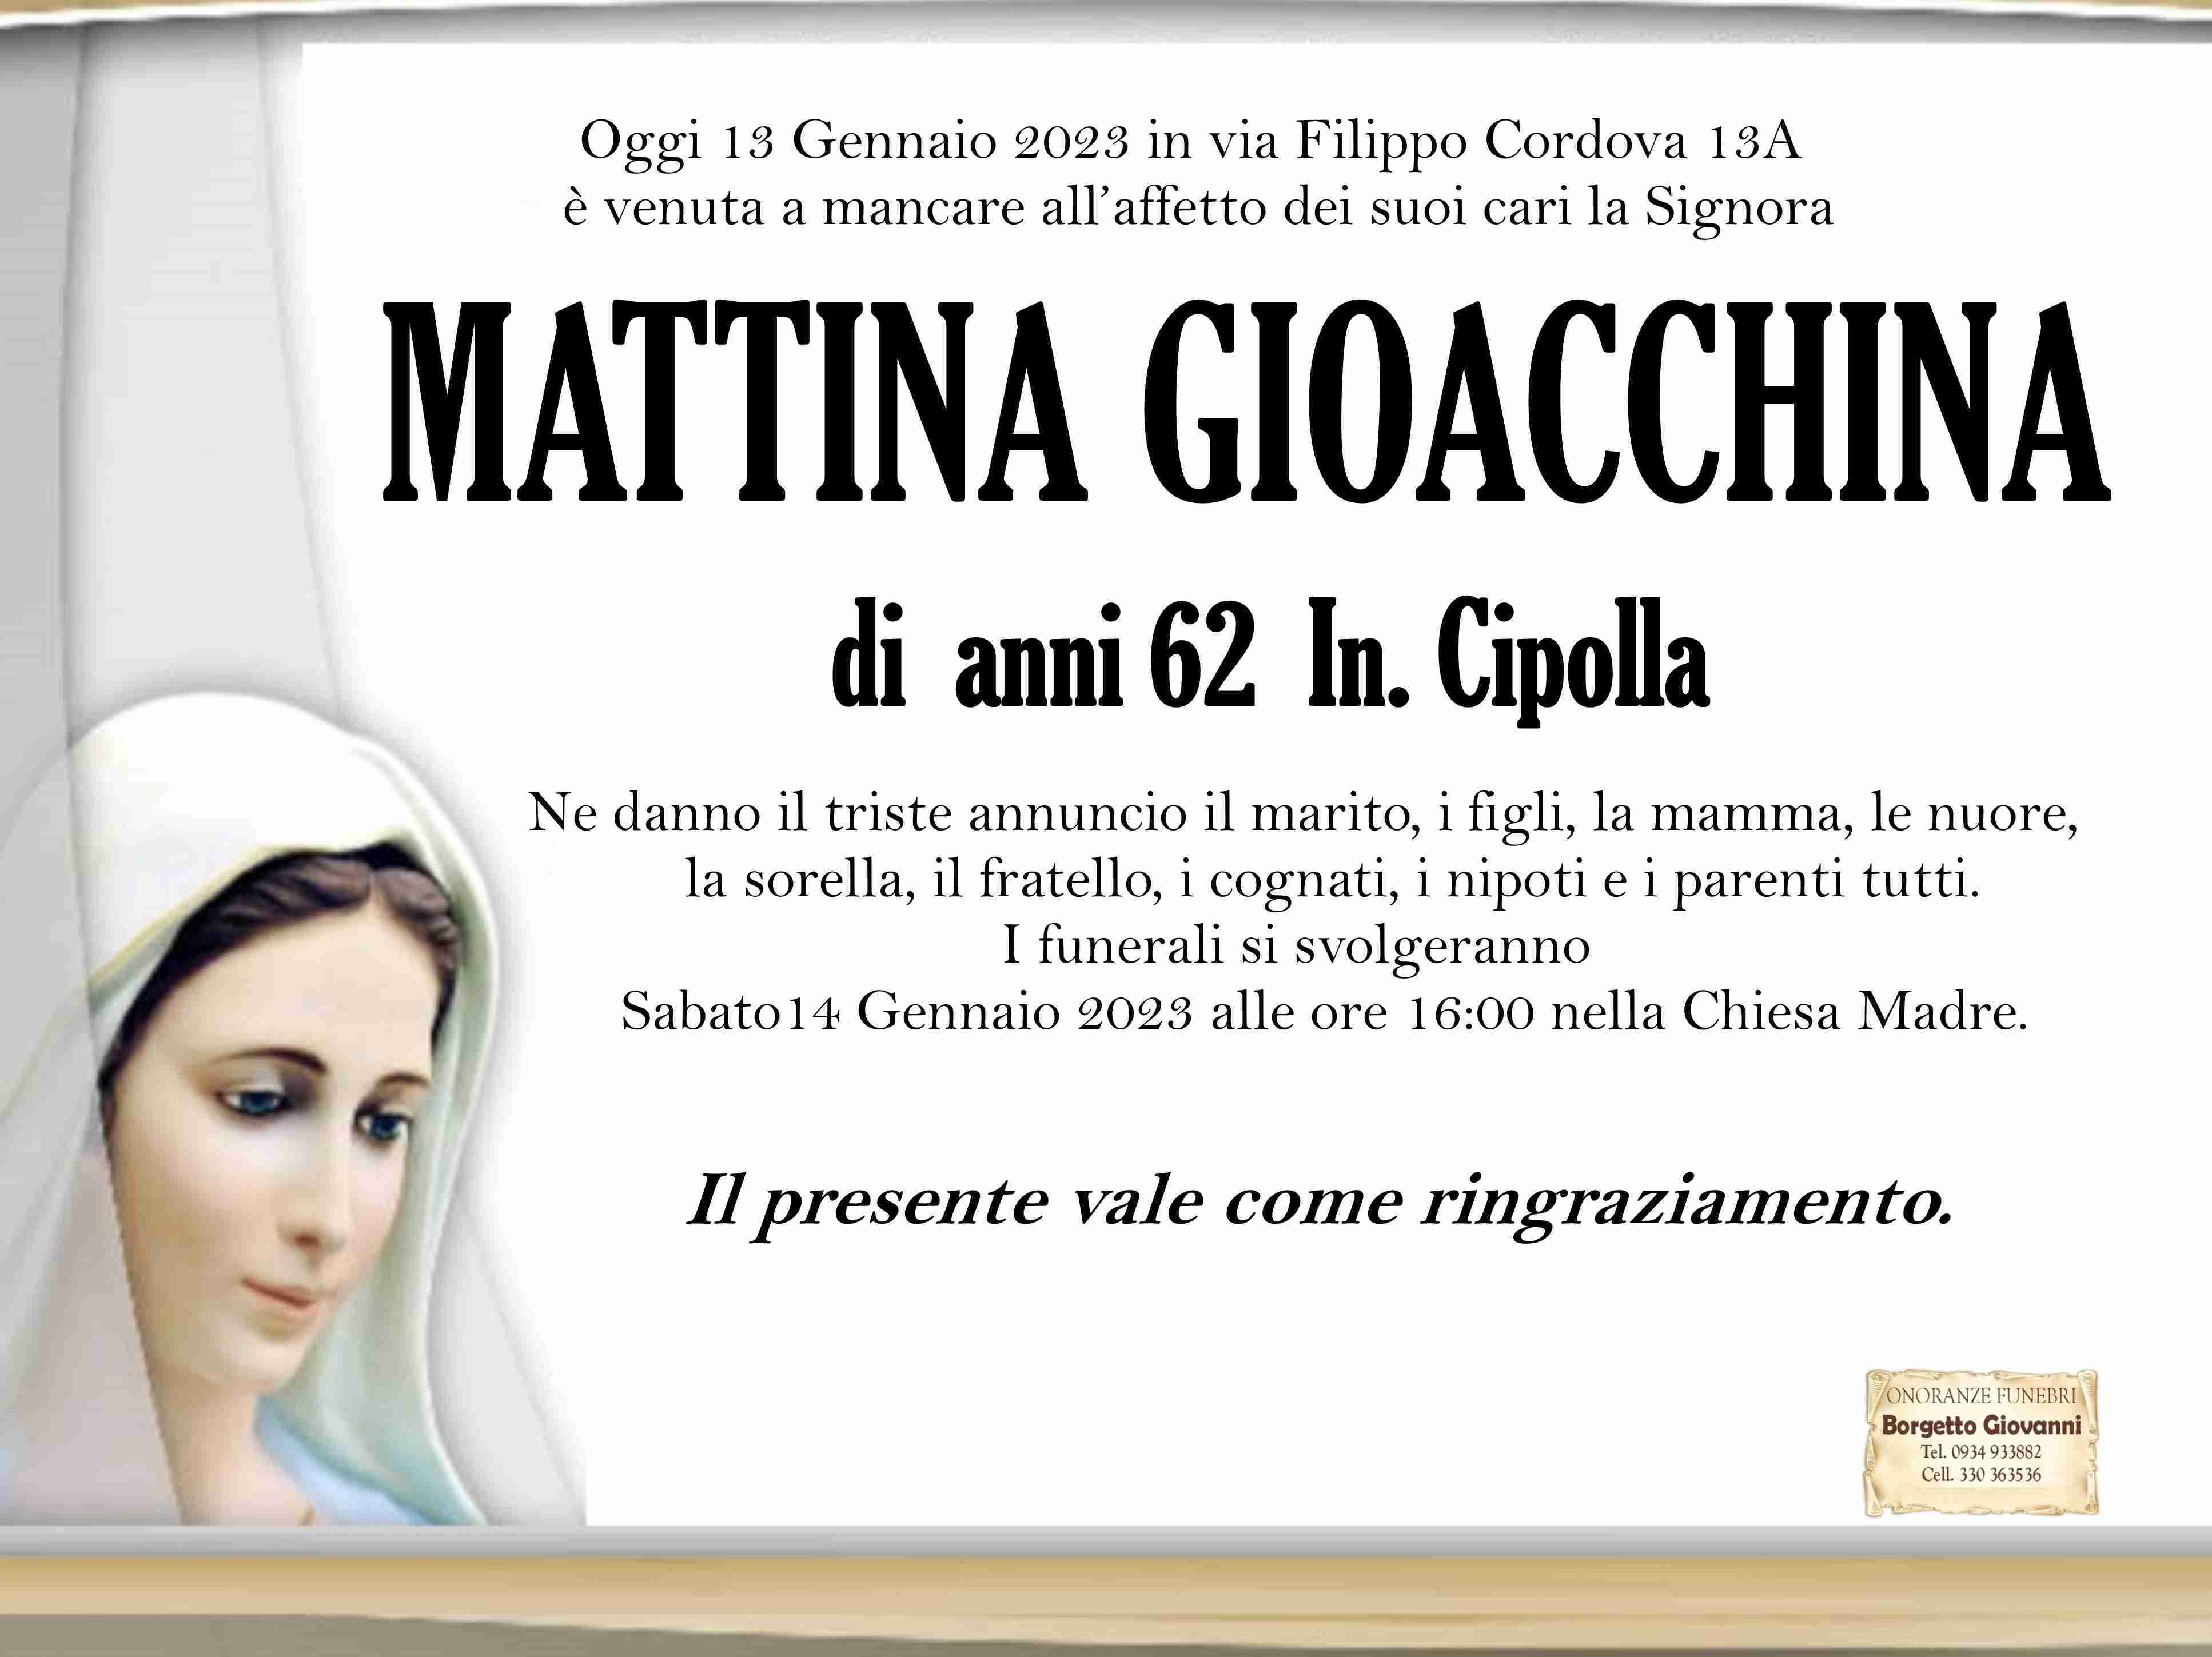 Gioacchina Mattina